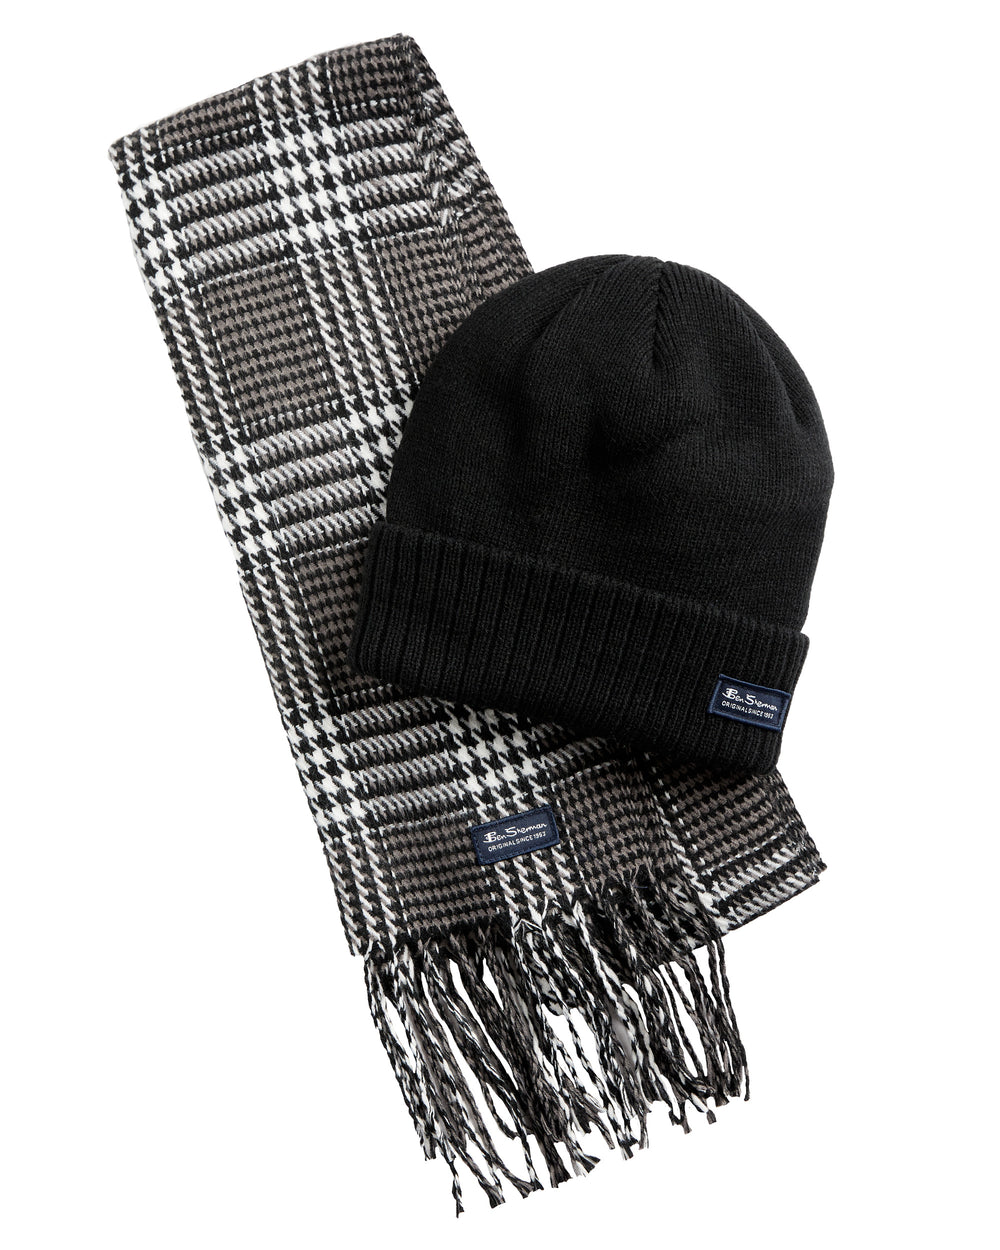 Men's Woven Plaid Scarf & Hat Set - True Black/Odyssey Grey